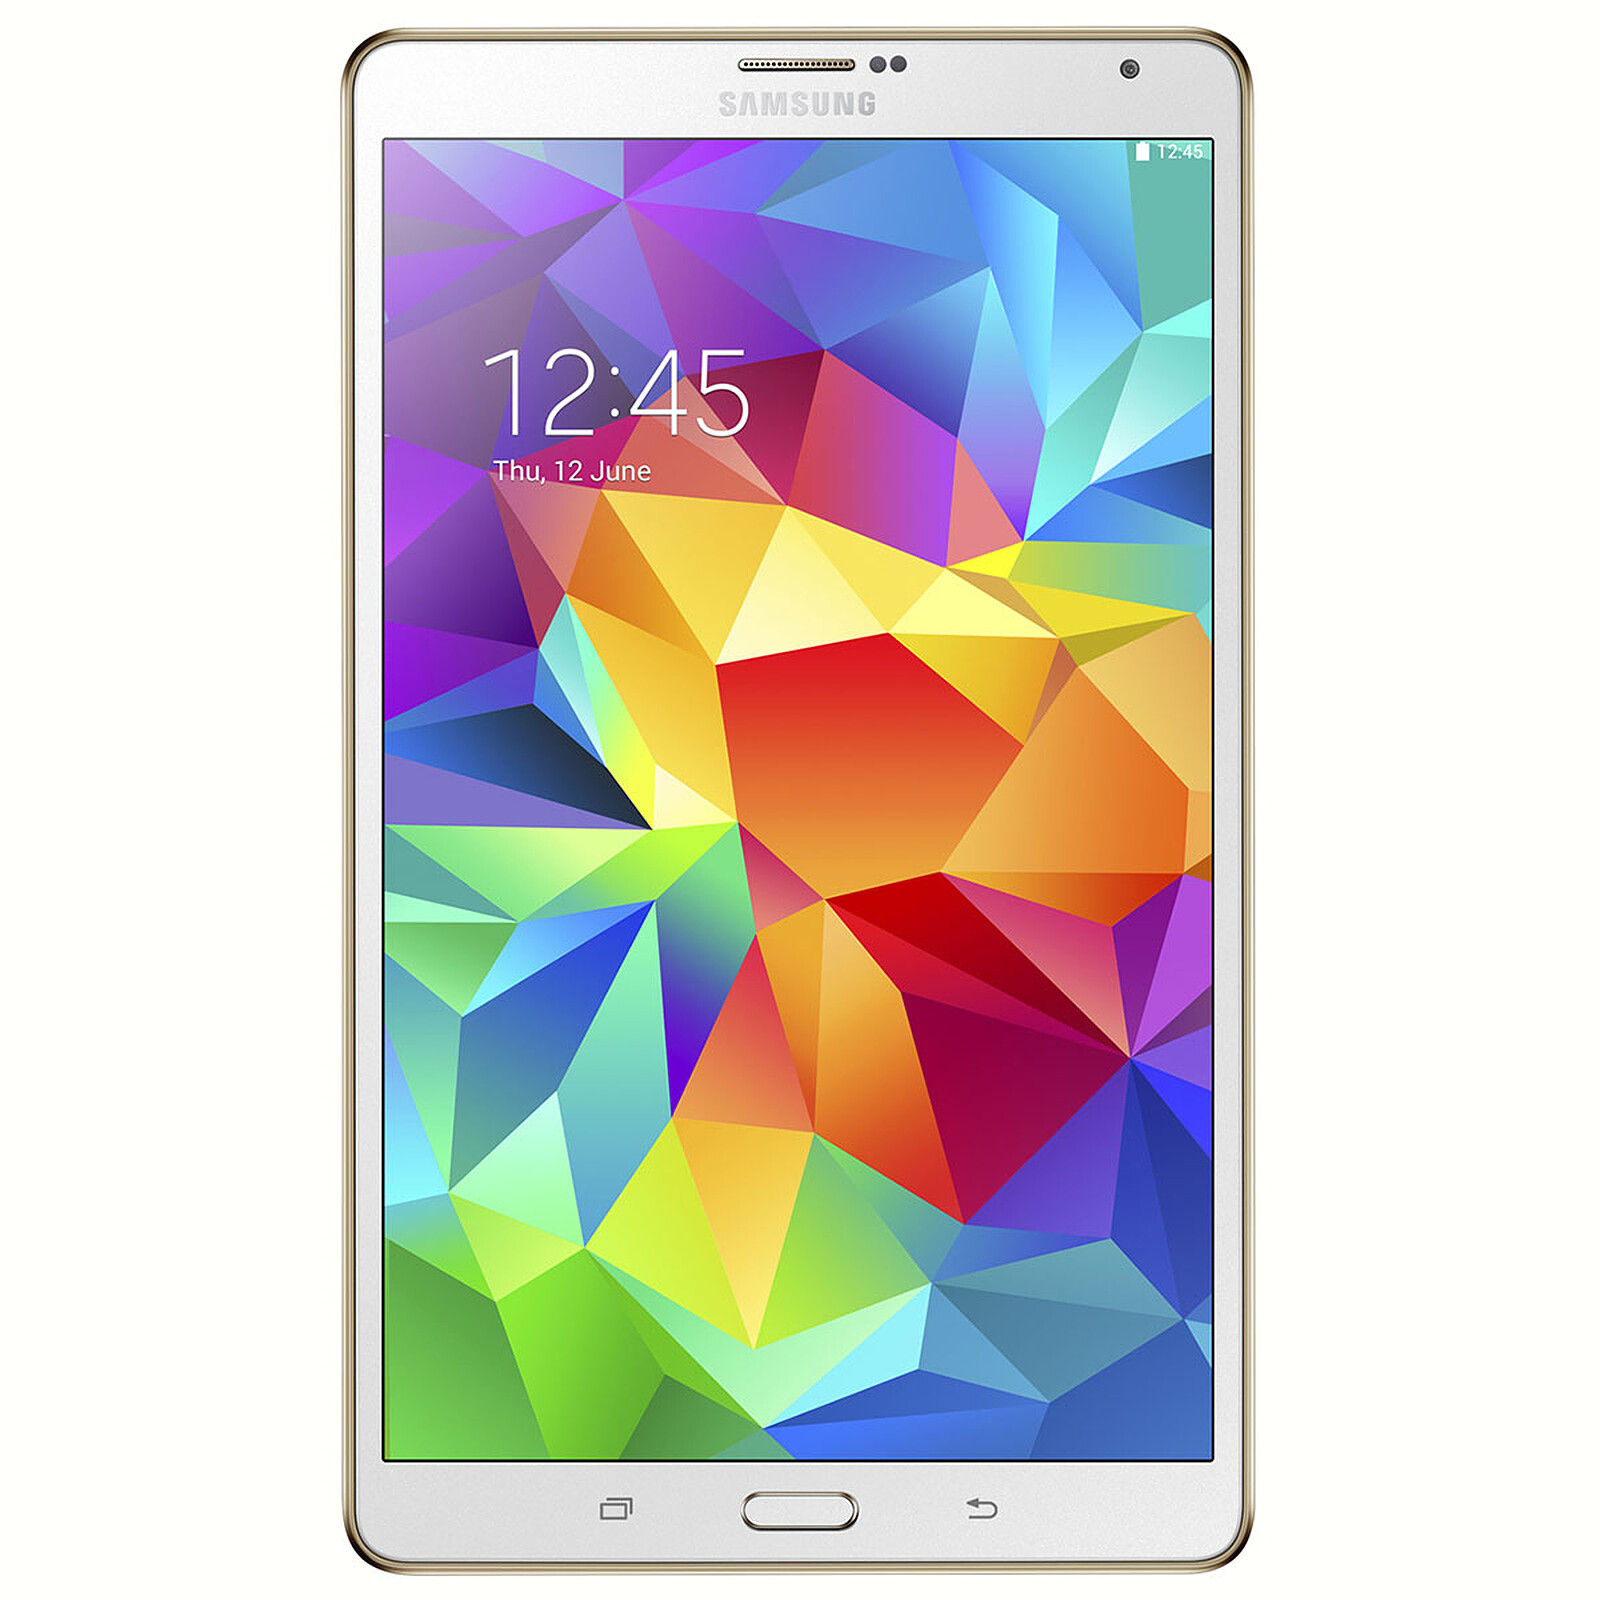 Samsung Galaxy Tab S 8.4 SM-T705 16 Go Blanche - Tablette tactile -  Garantie 3 ans LDLC